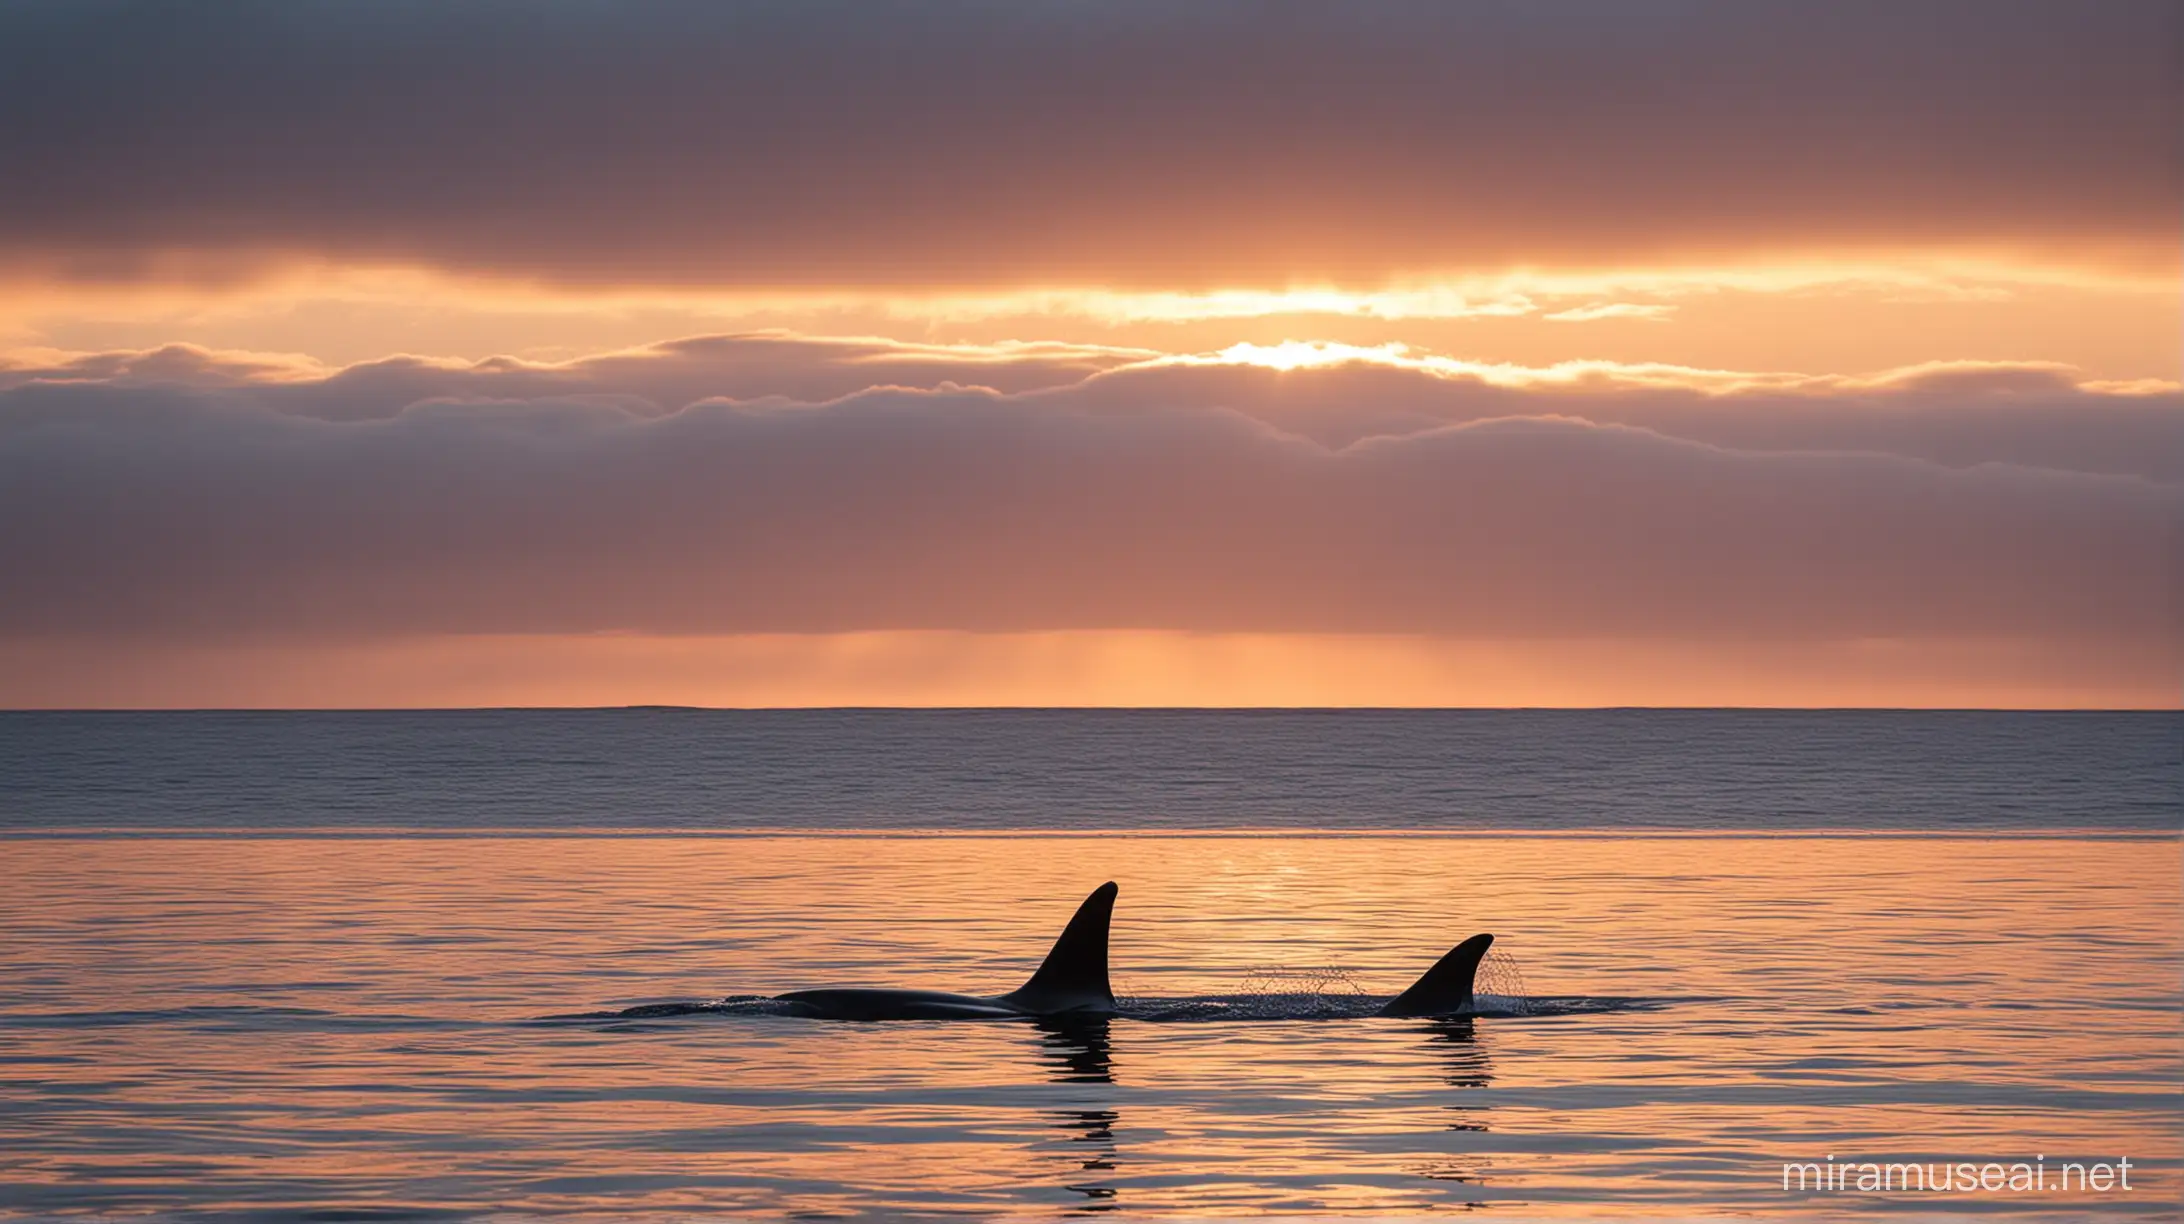 Majestic Killer Whale in Winter Sunrise off the Coast of Scotland